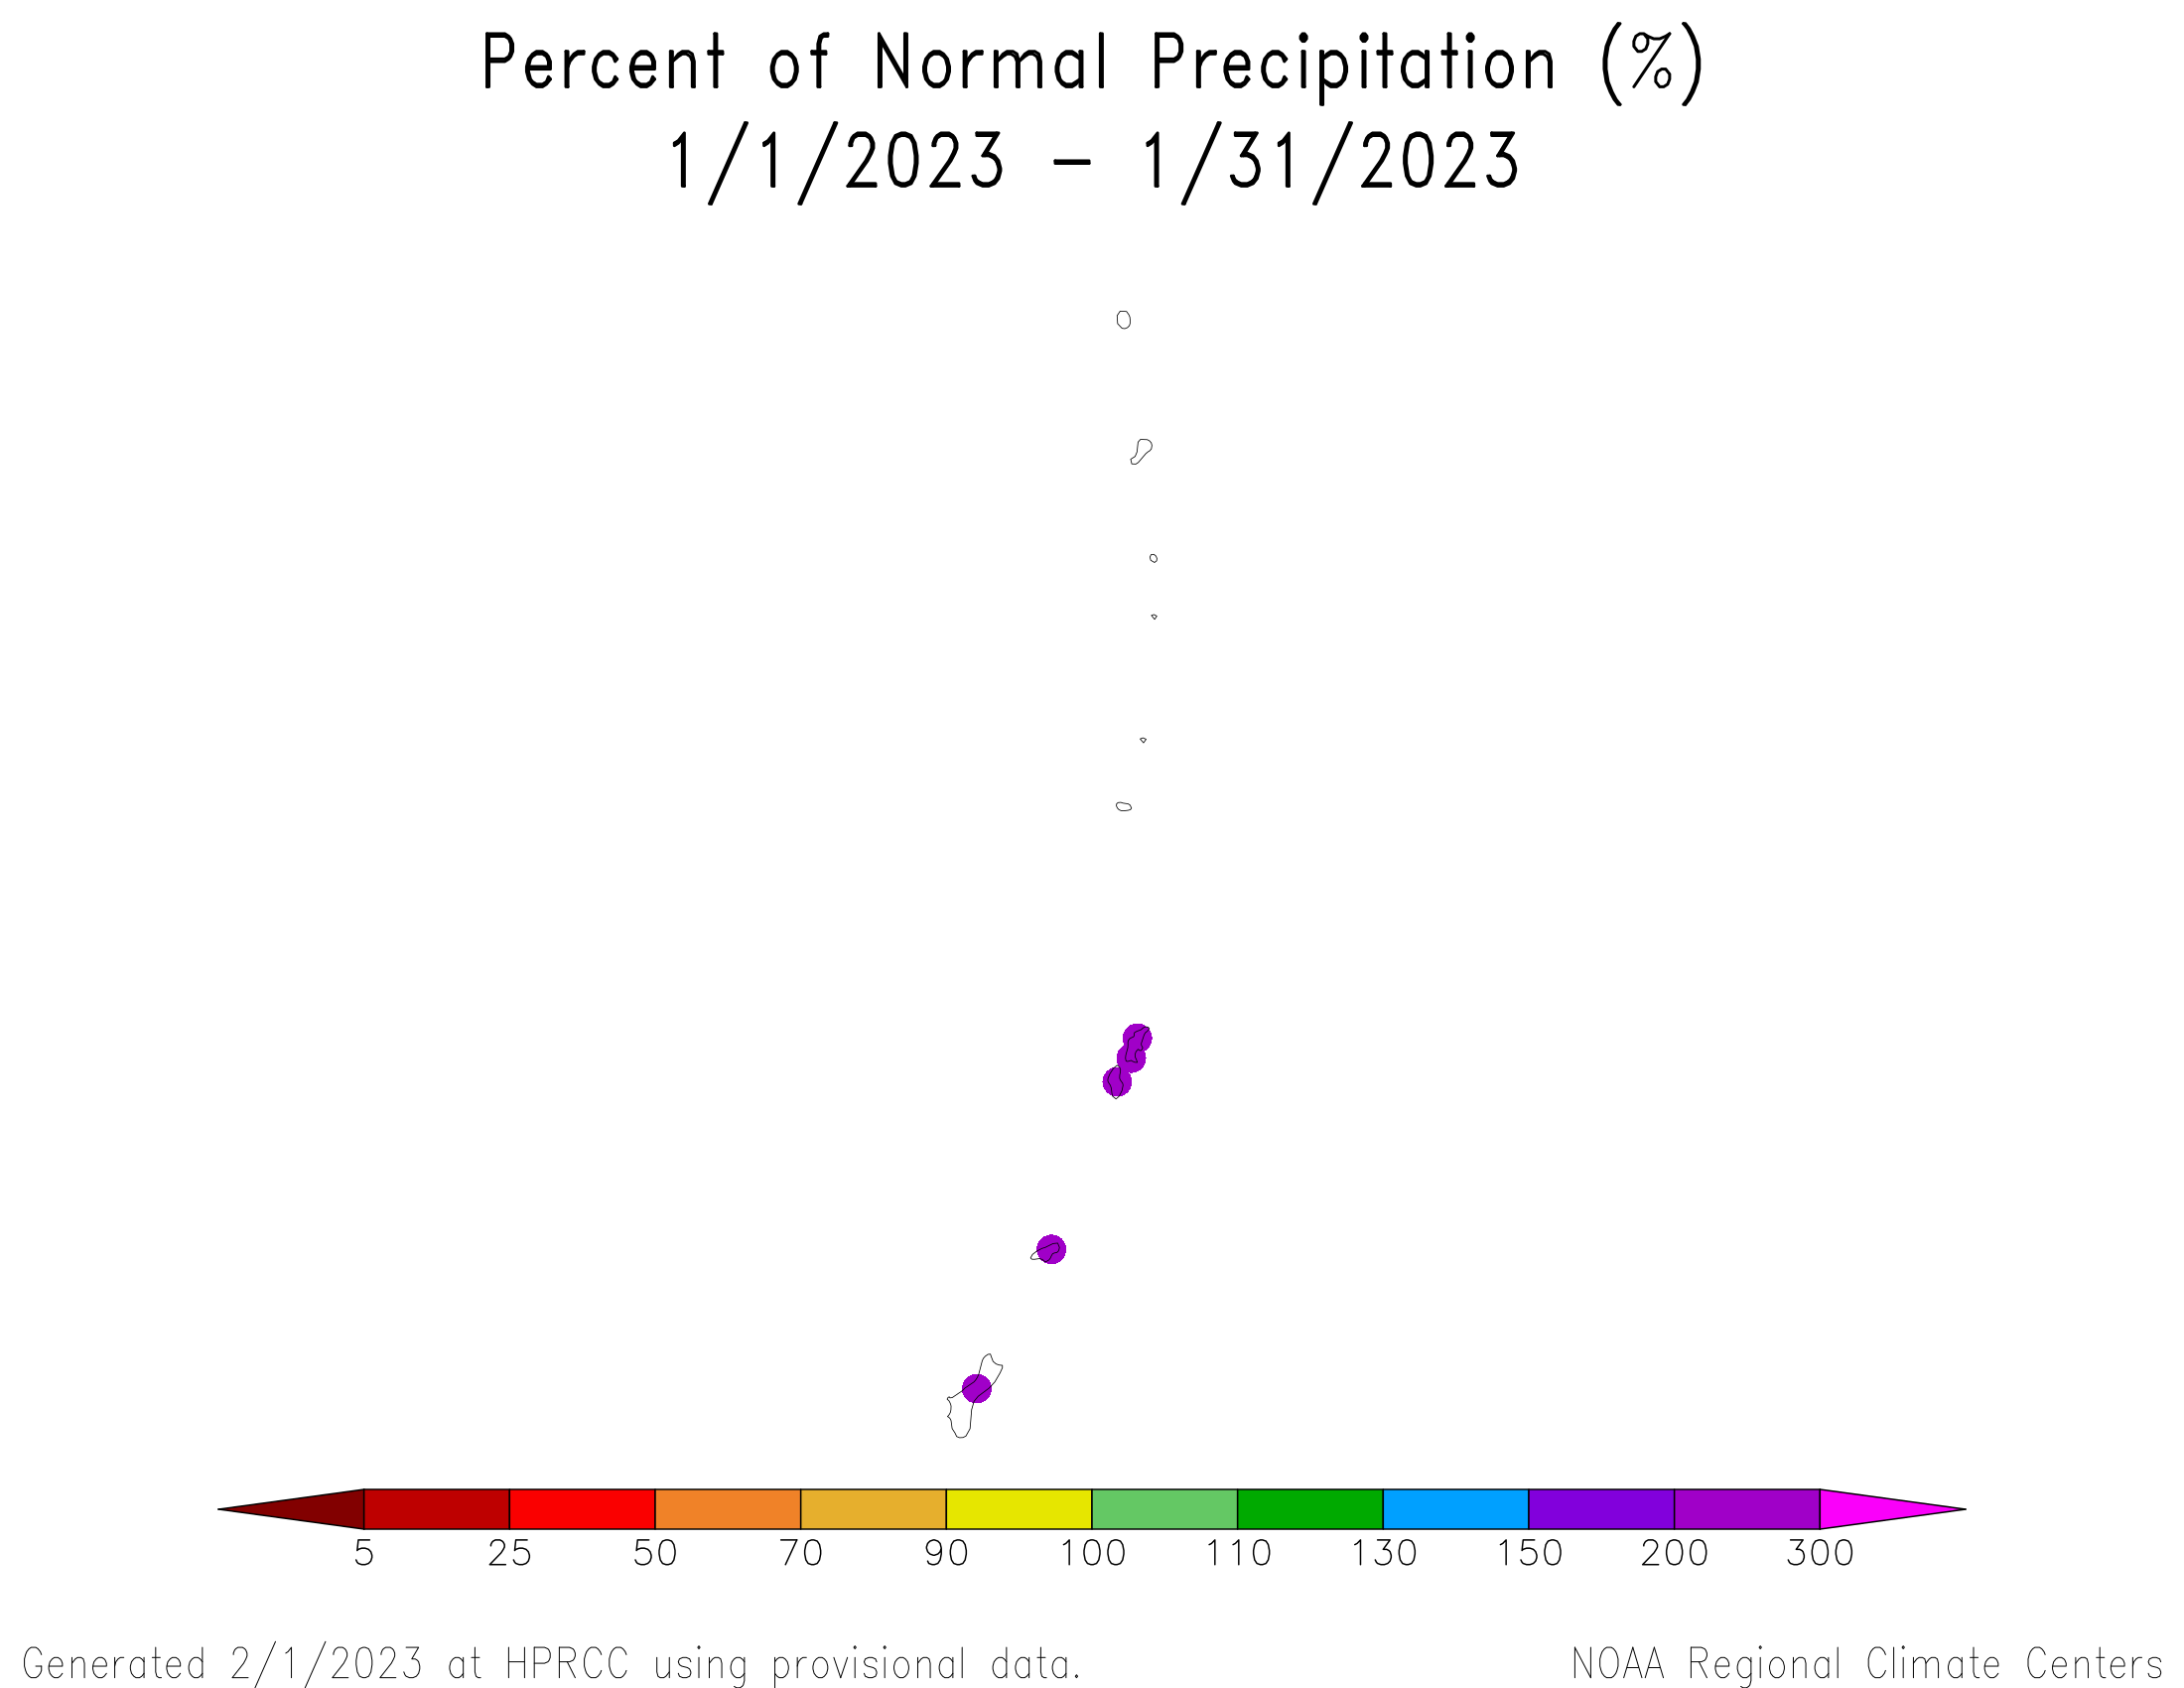 January 2023 Percent of Normal Precipitation for the Marianas